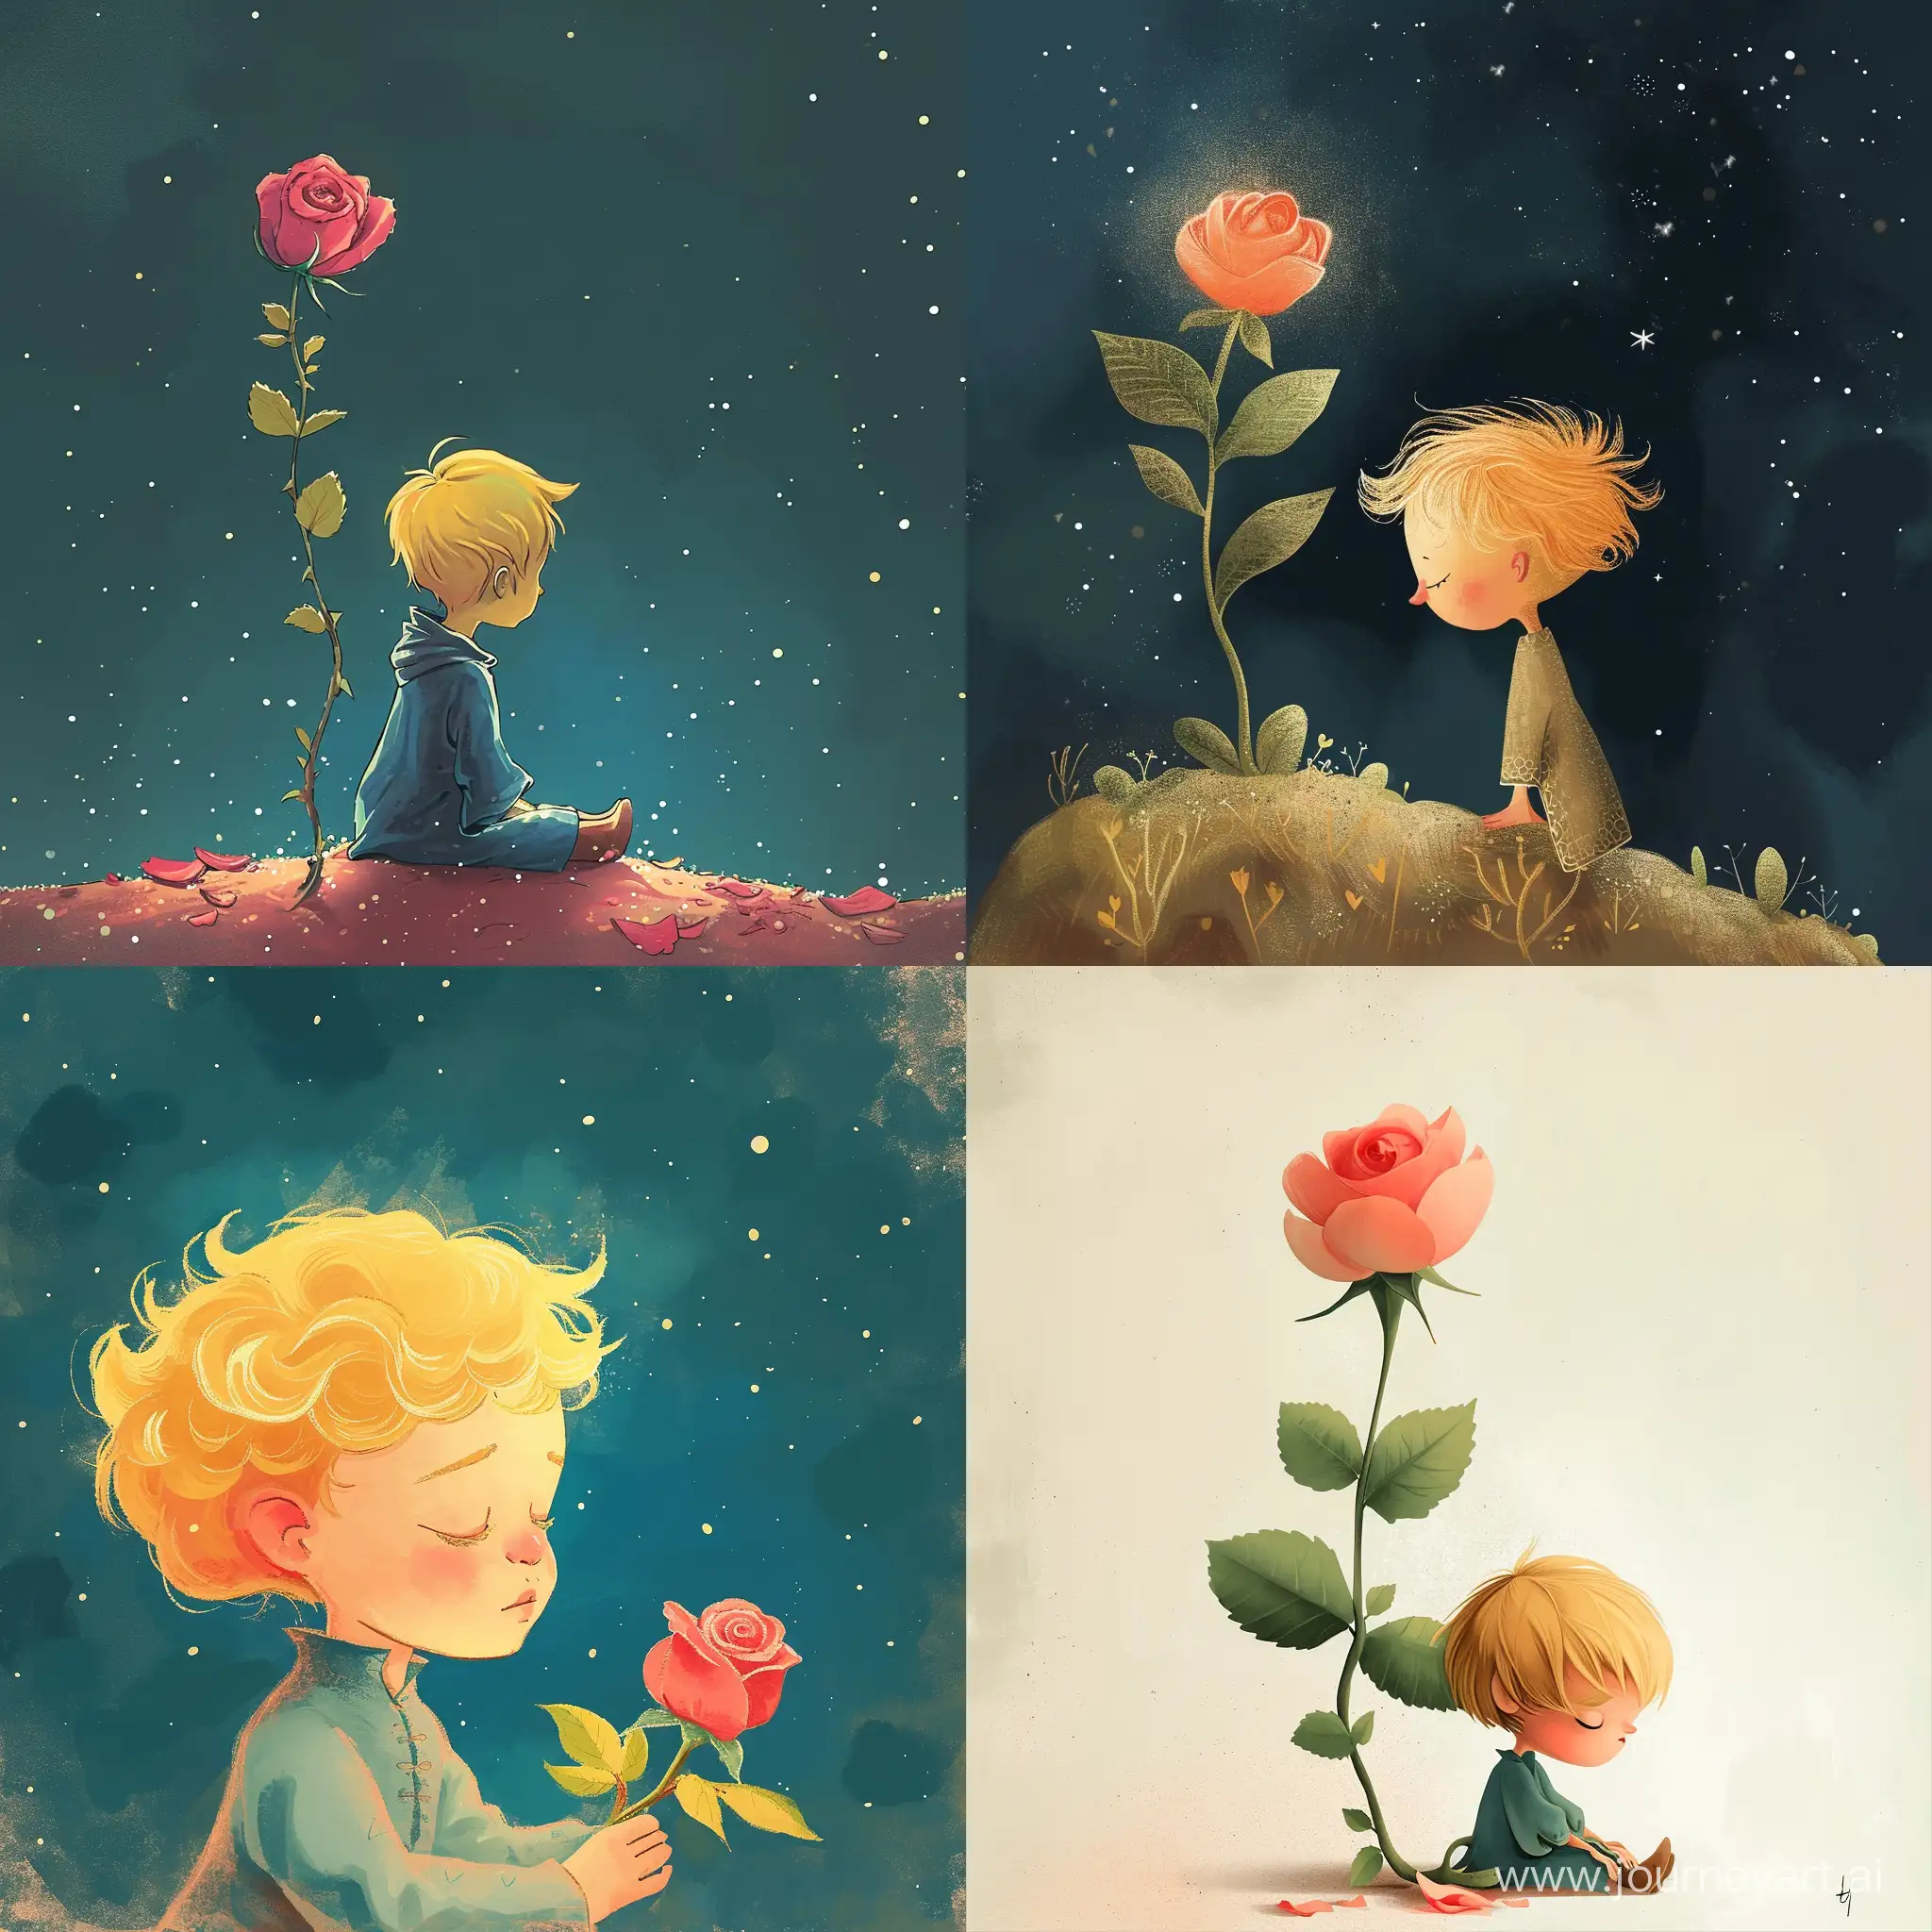 Melancholic-Little-Prince-with-Rose-Poignant-Illustration